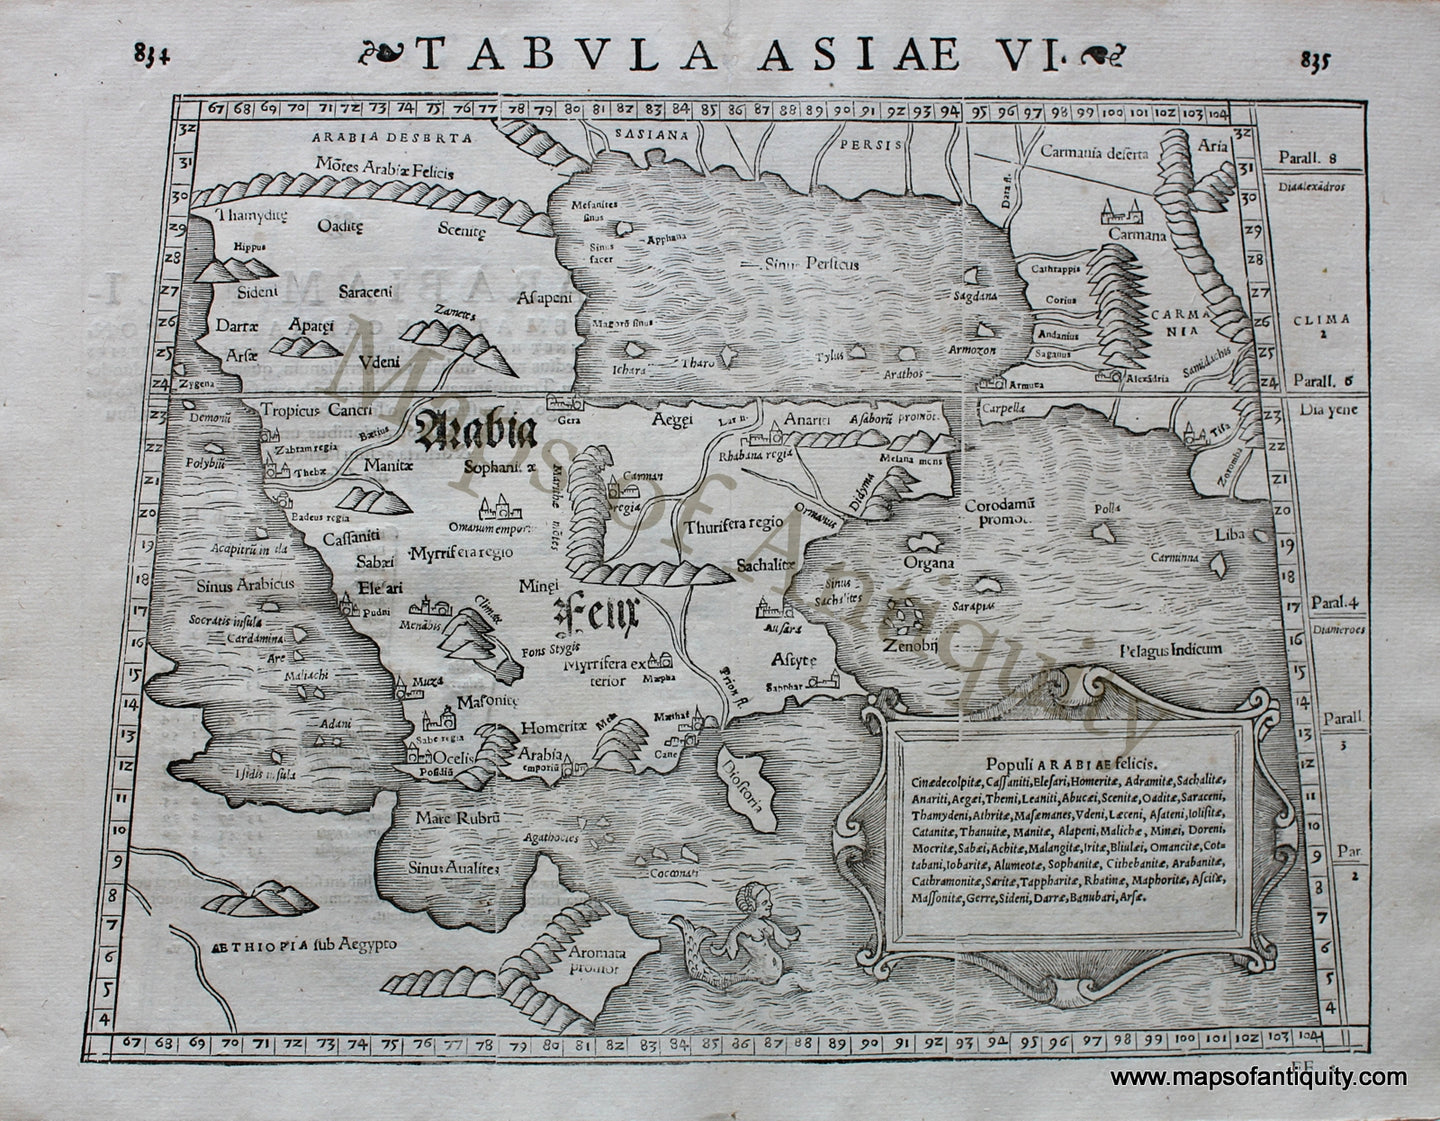 Antique-Black-and-White-Engraved-Map-Tabula-Asiae-VI-Strabonis-Asia-Asia-Saudi-Arabia-1542-Munster-Maps-Of-Antiquity